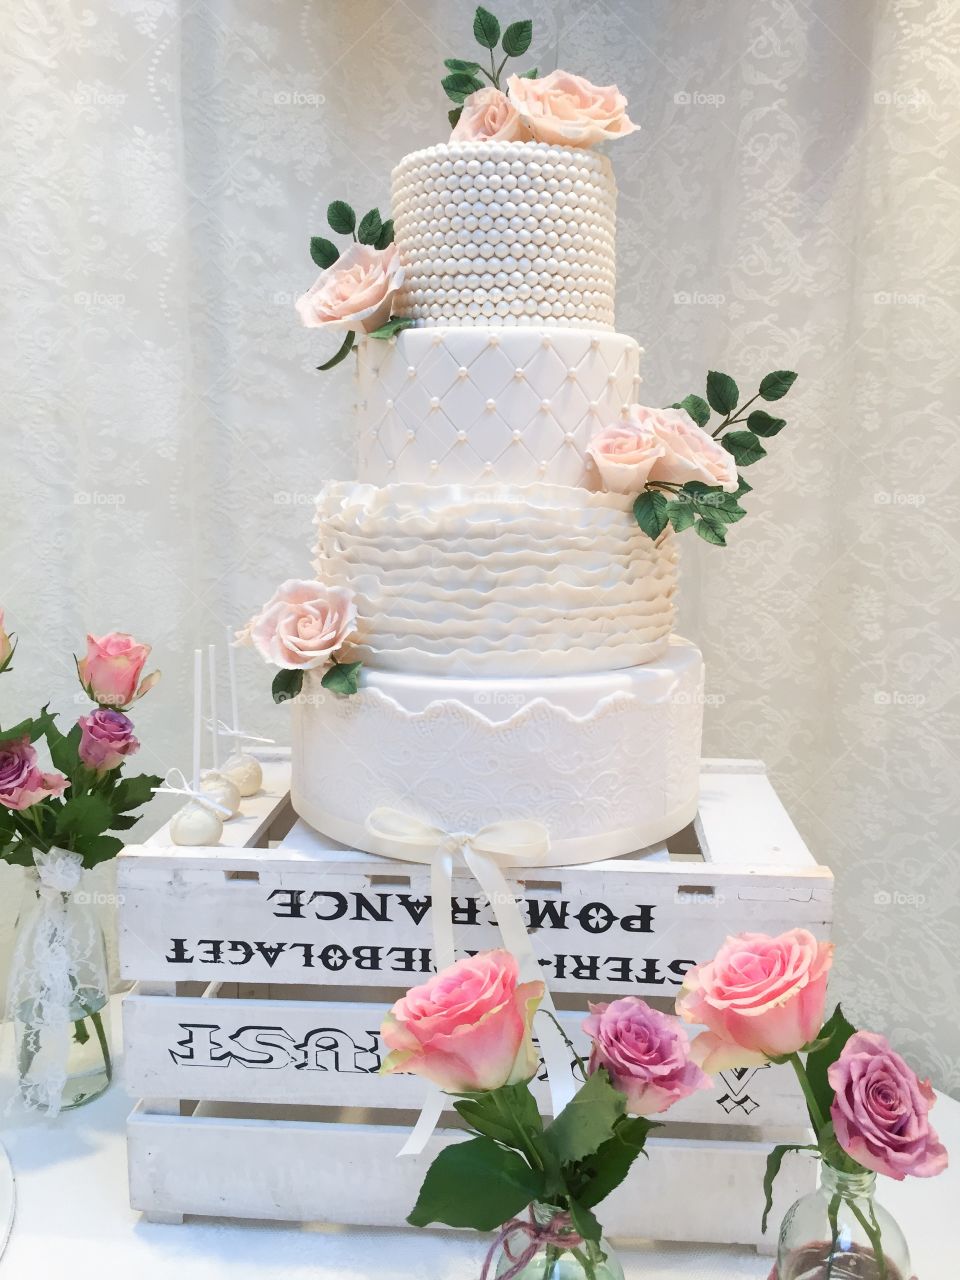 Wedding cake on display at a weddingfair.